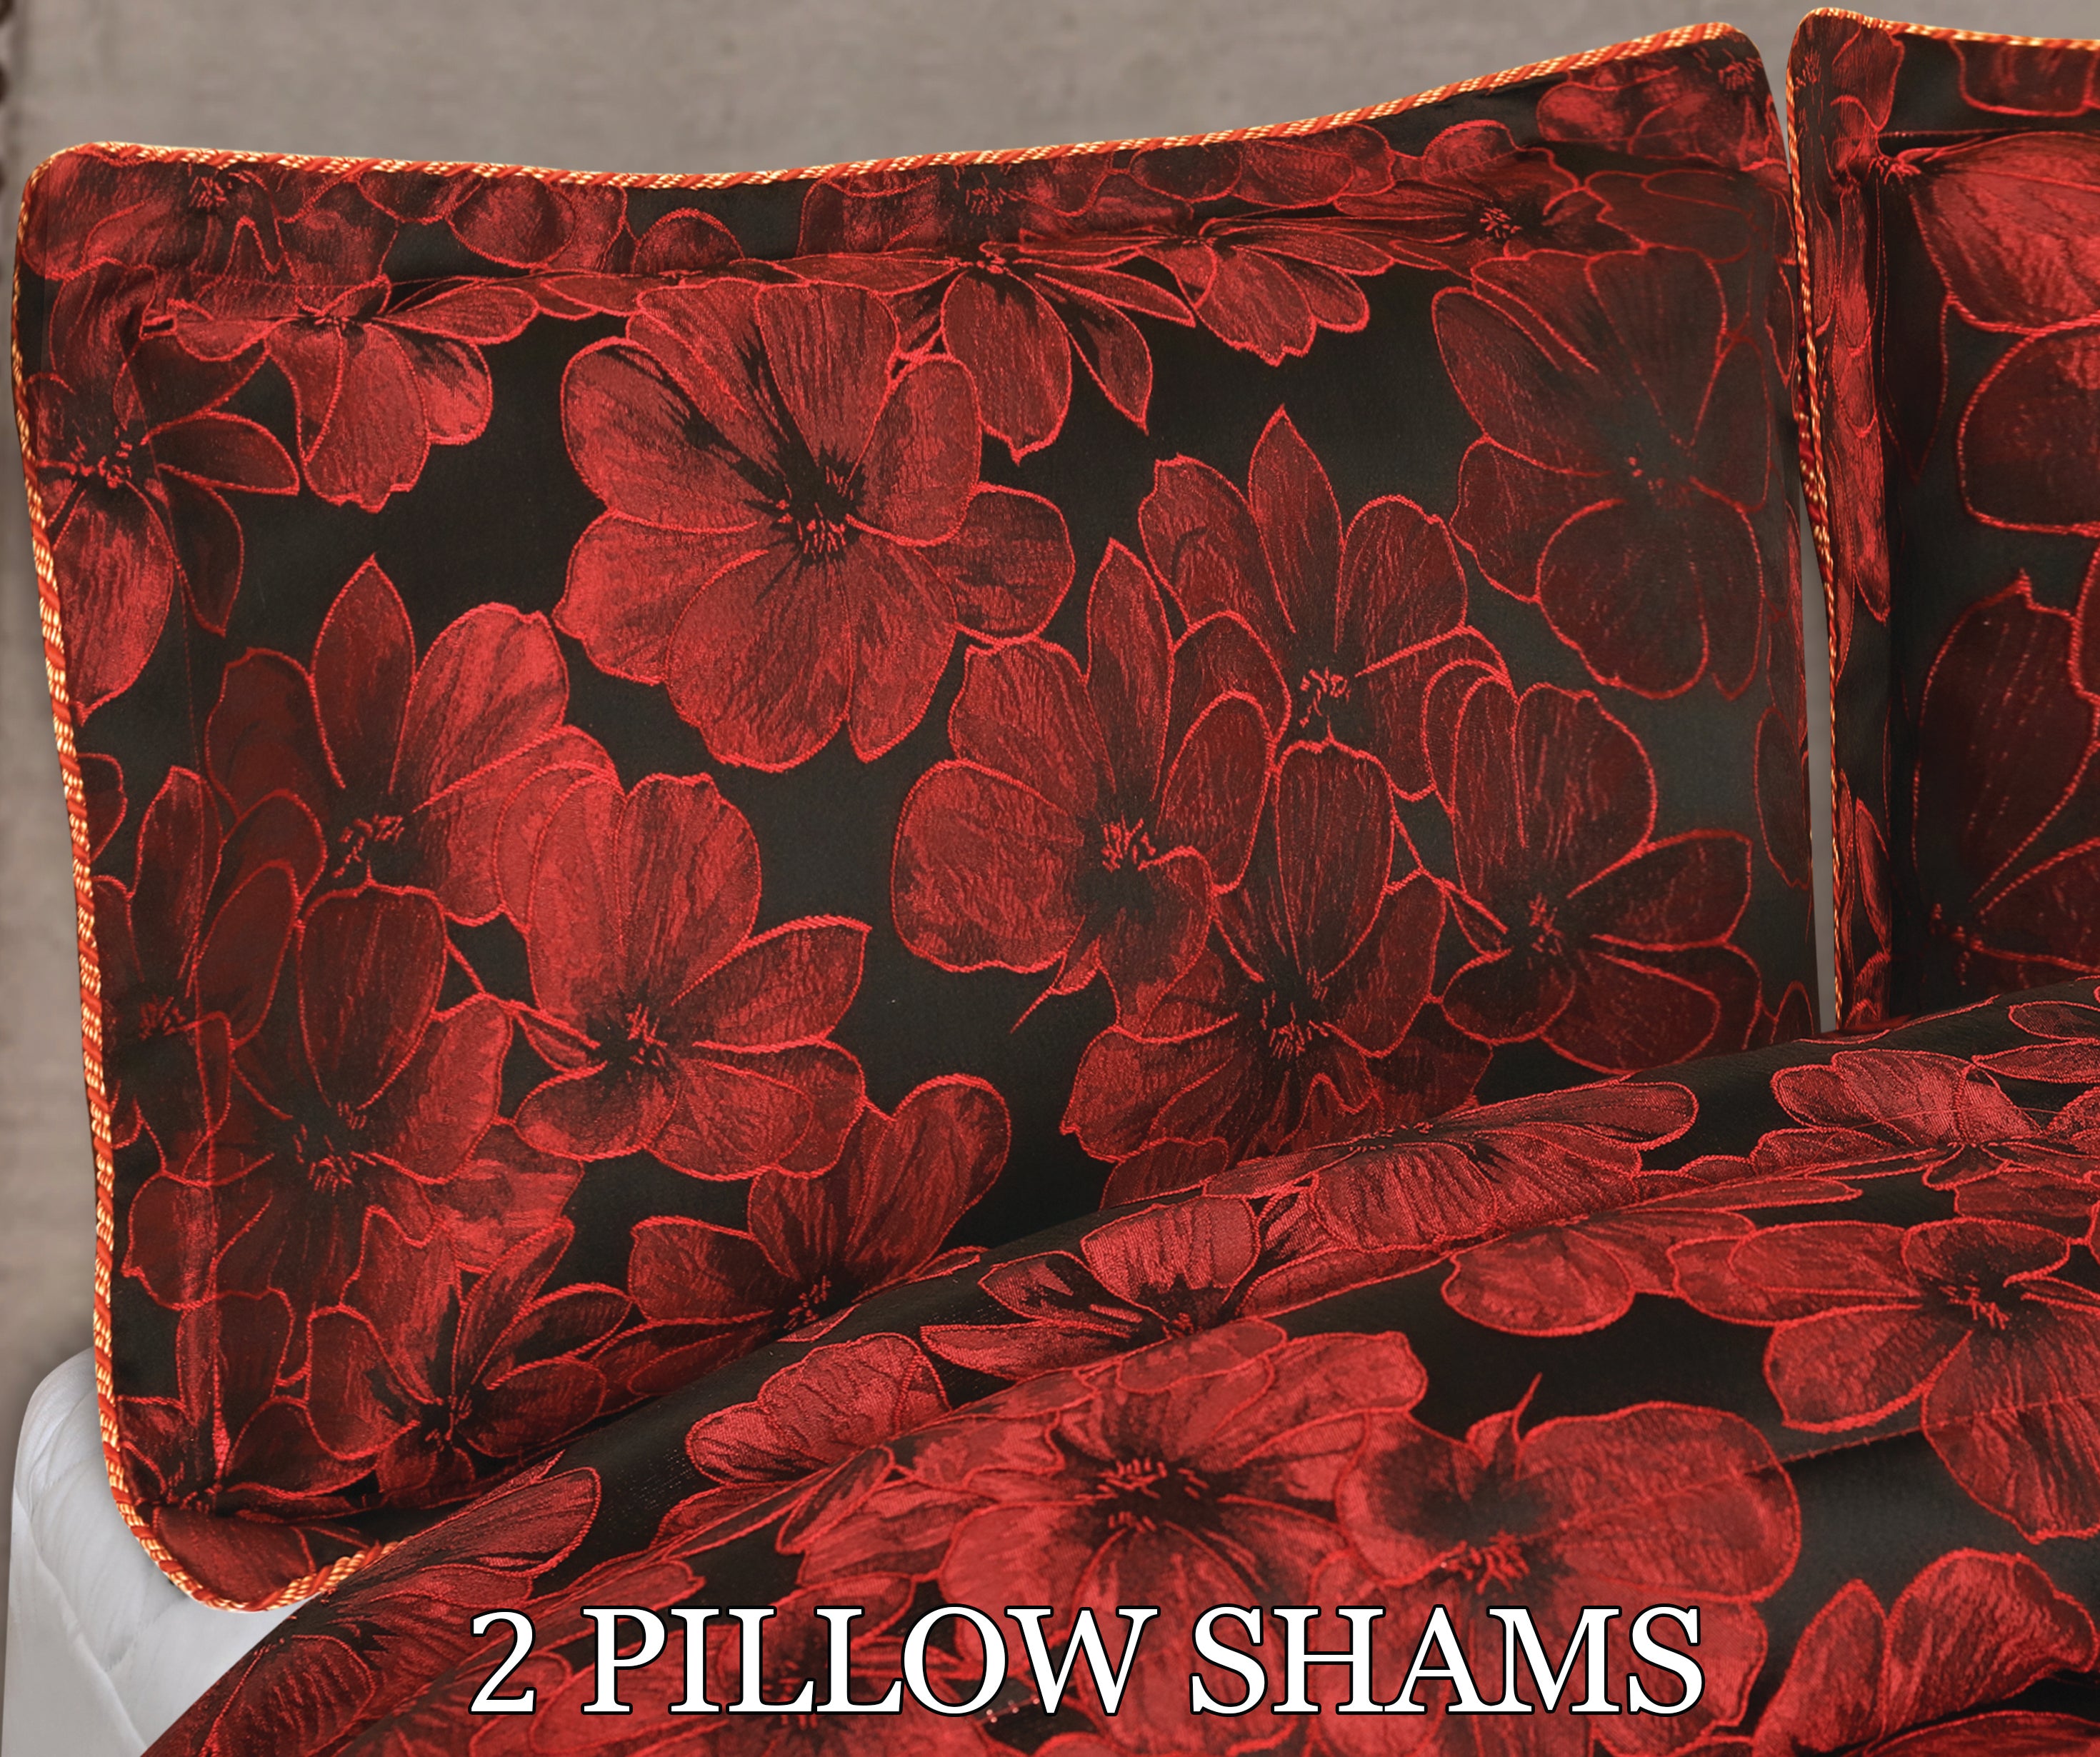 Zara Red Luxury Jacquard Comforter Set